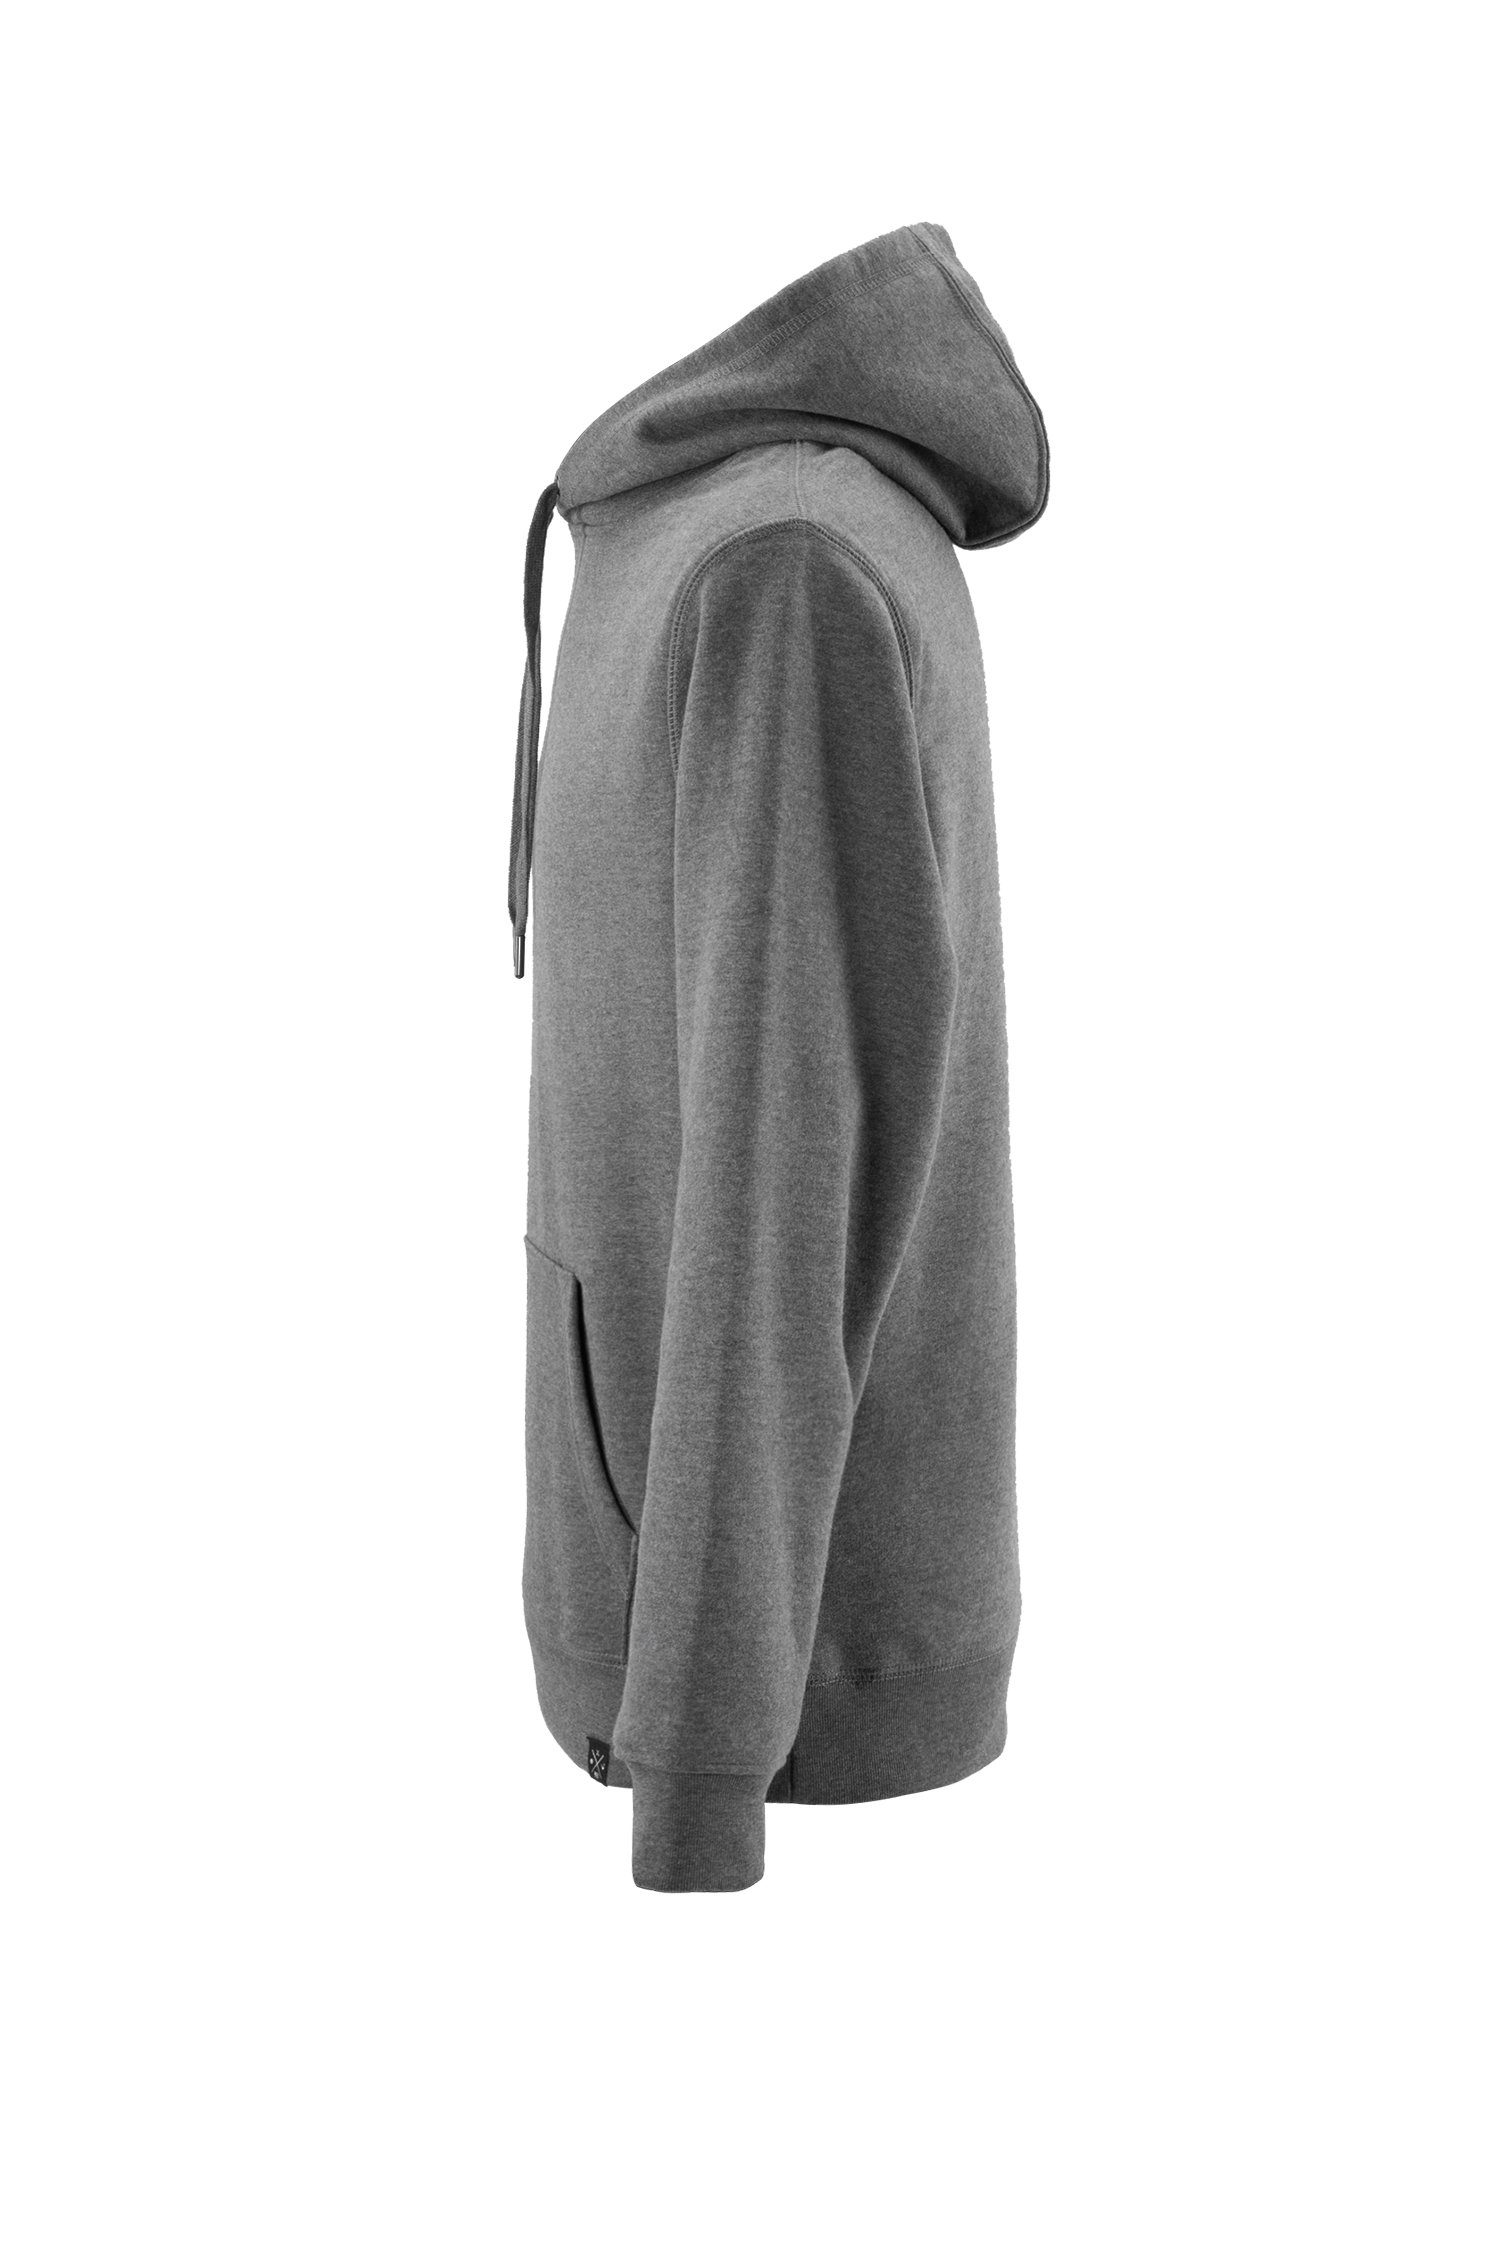 Hoodie Sweater - Bully mit Asphalt Metallkordeln M13 Kapuzenpullover Manufaktur13 Hooded